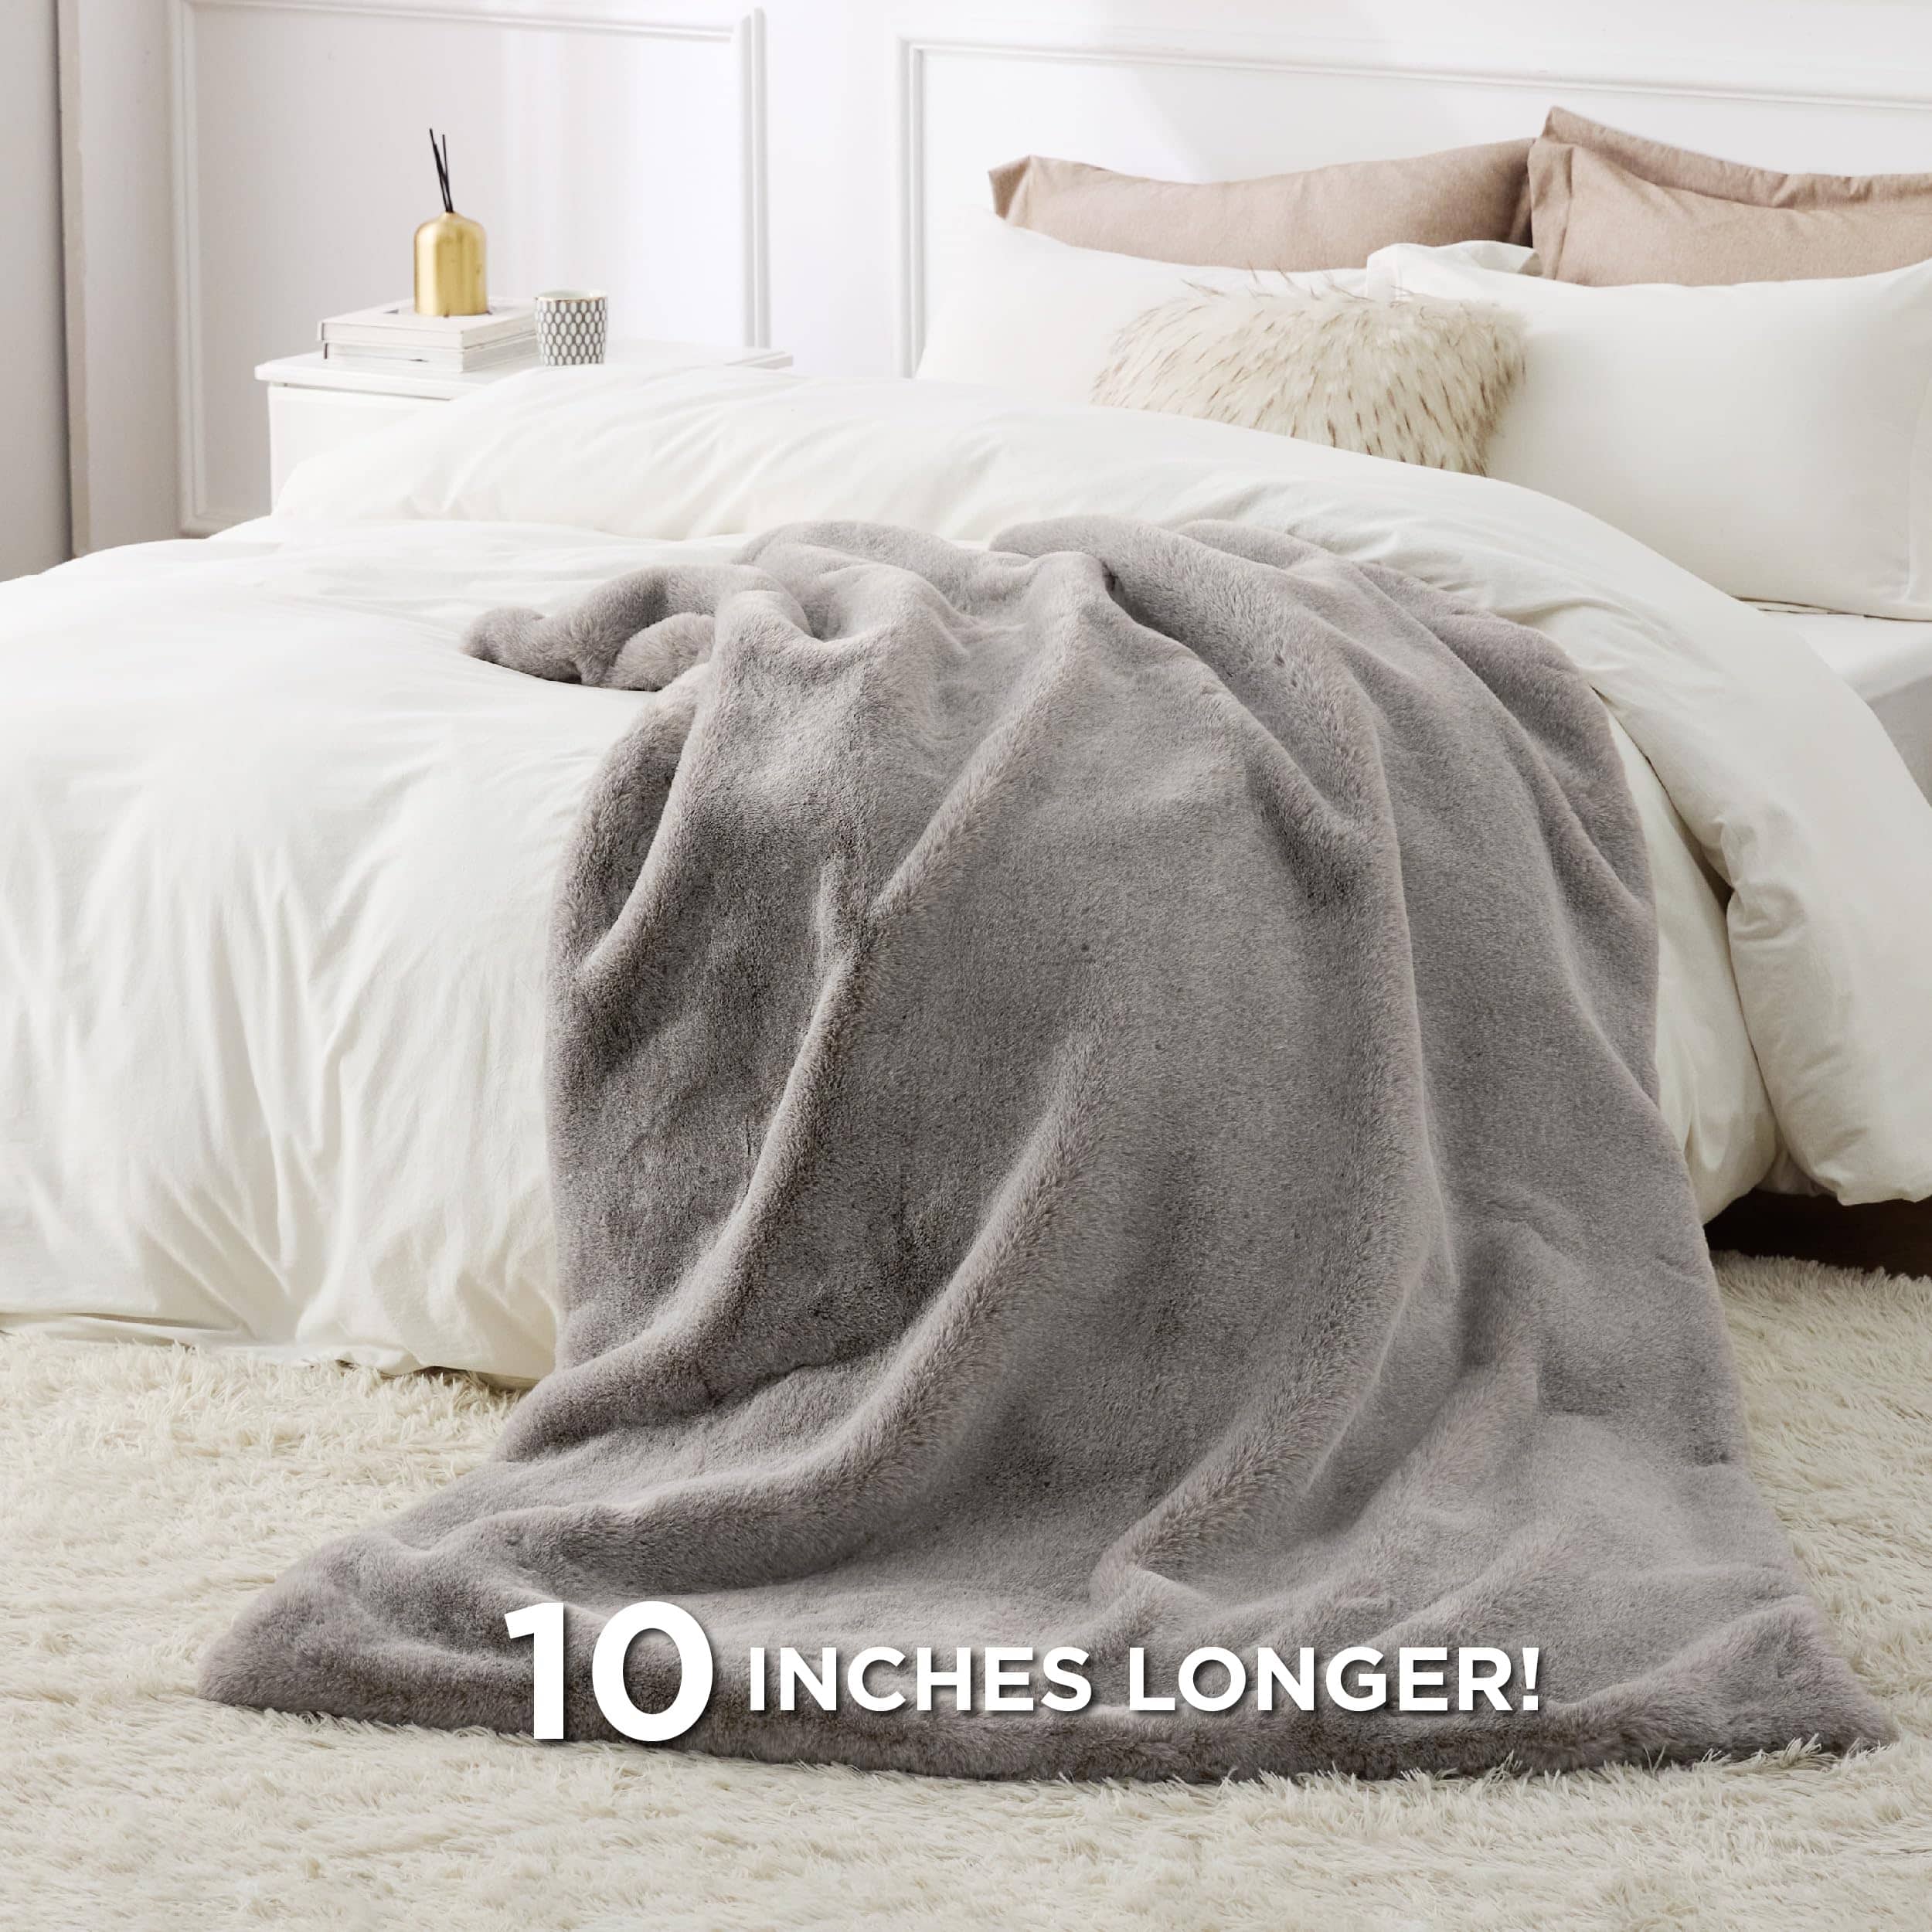 Bedsure Faux Fur Throw Blanket